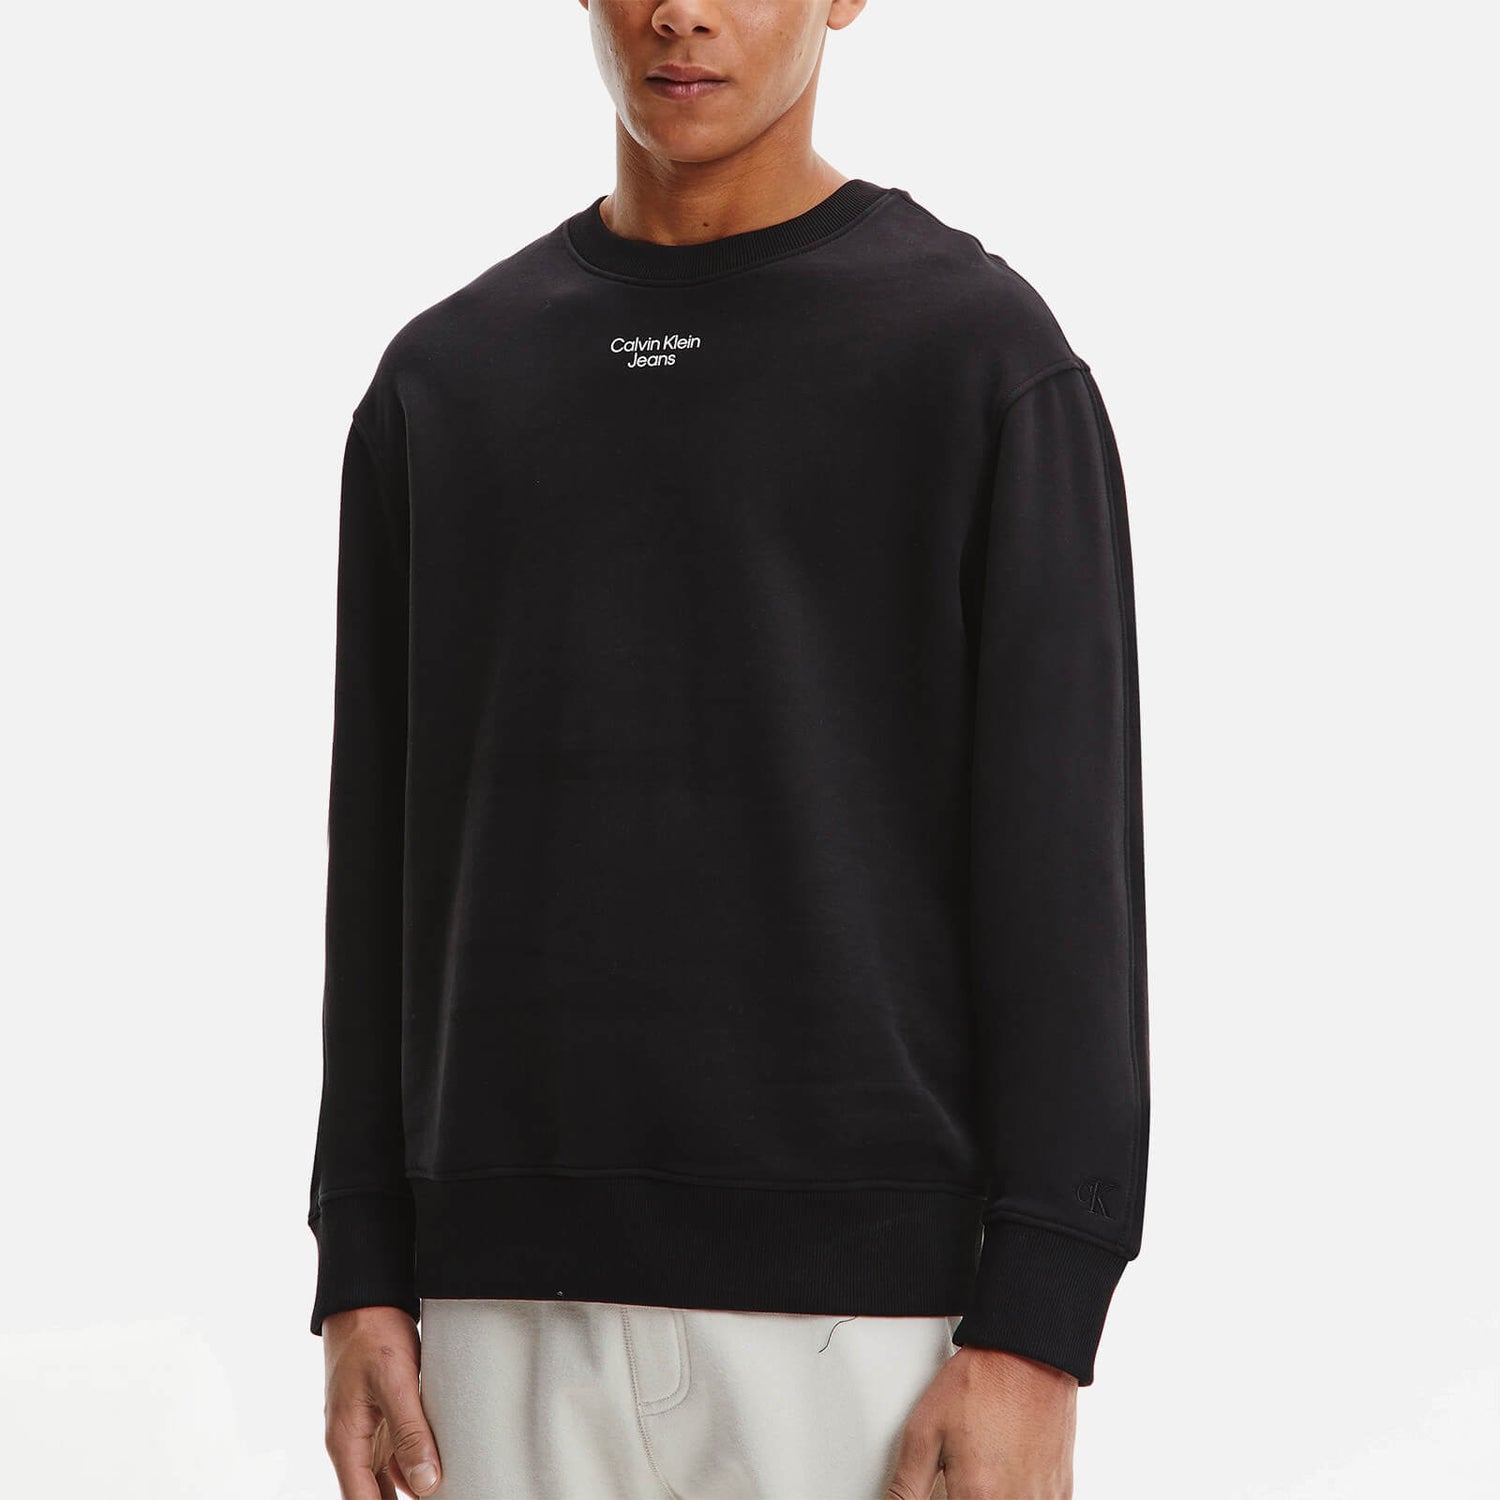 Calvin Klein Jeans Men's Stacked Logo Crew Sweatshirt - Black - S